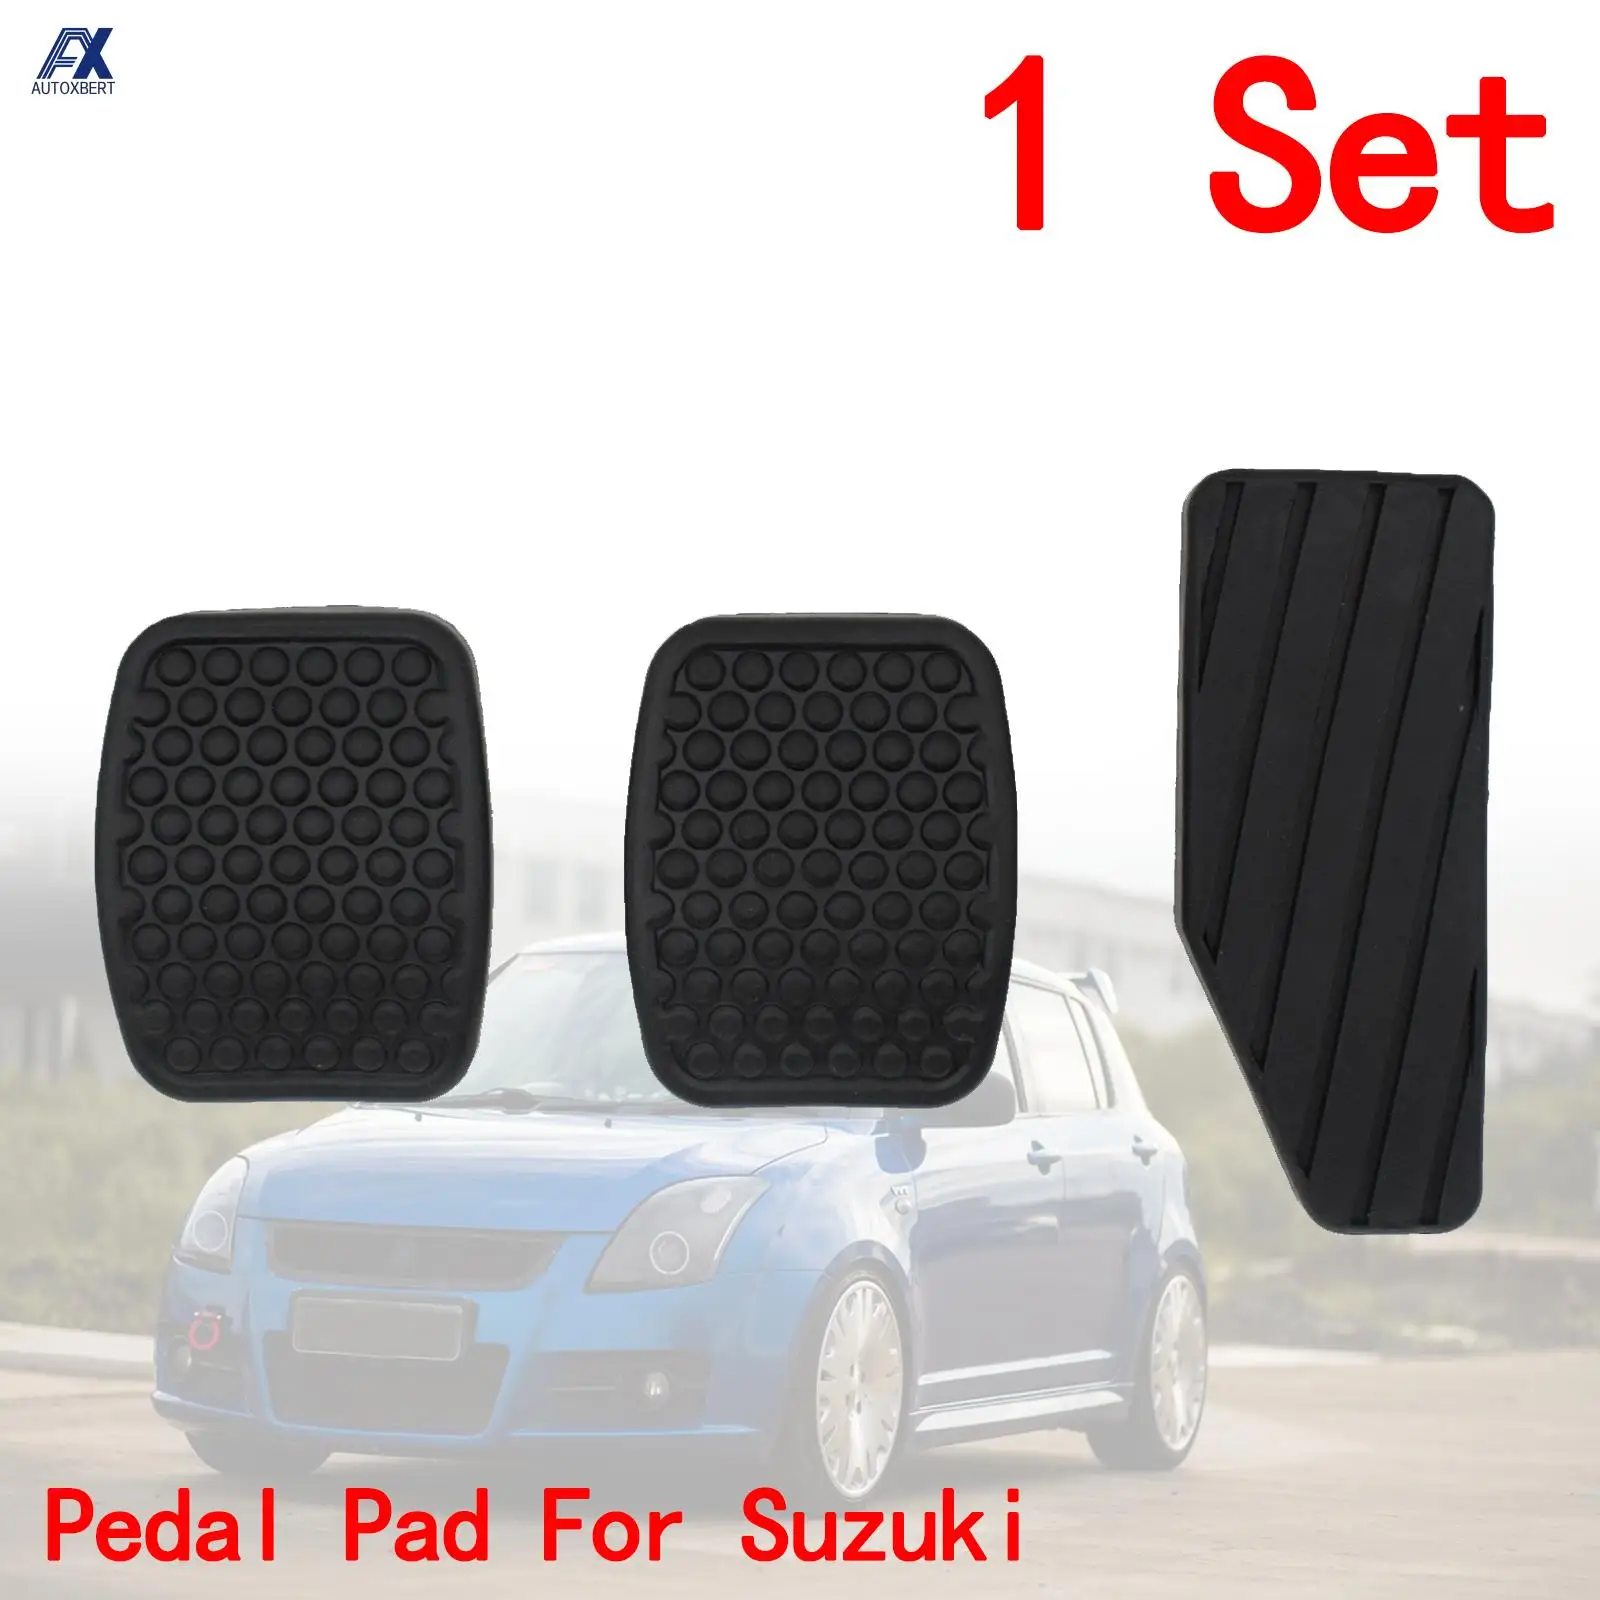 3Pcs/1 Set Brake Clutch Accelerator Pedal Rubber Pad Cover Kit for SUZUKI Swift Samurai Sidekick Vitara Tracker Car Accessories